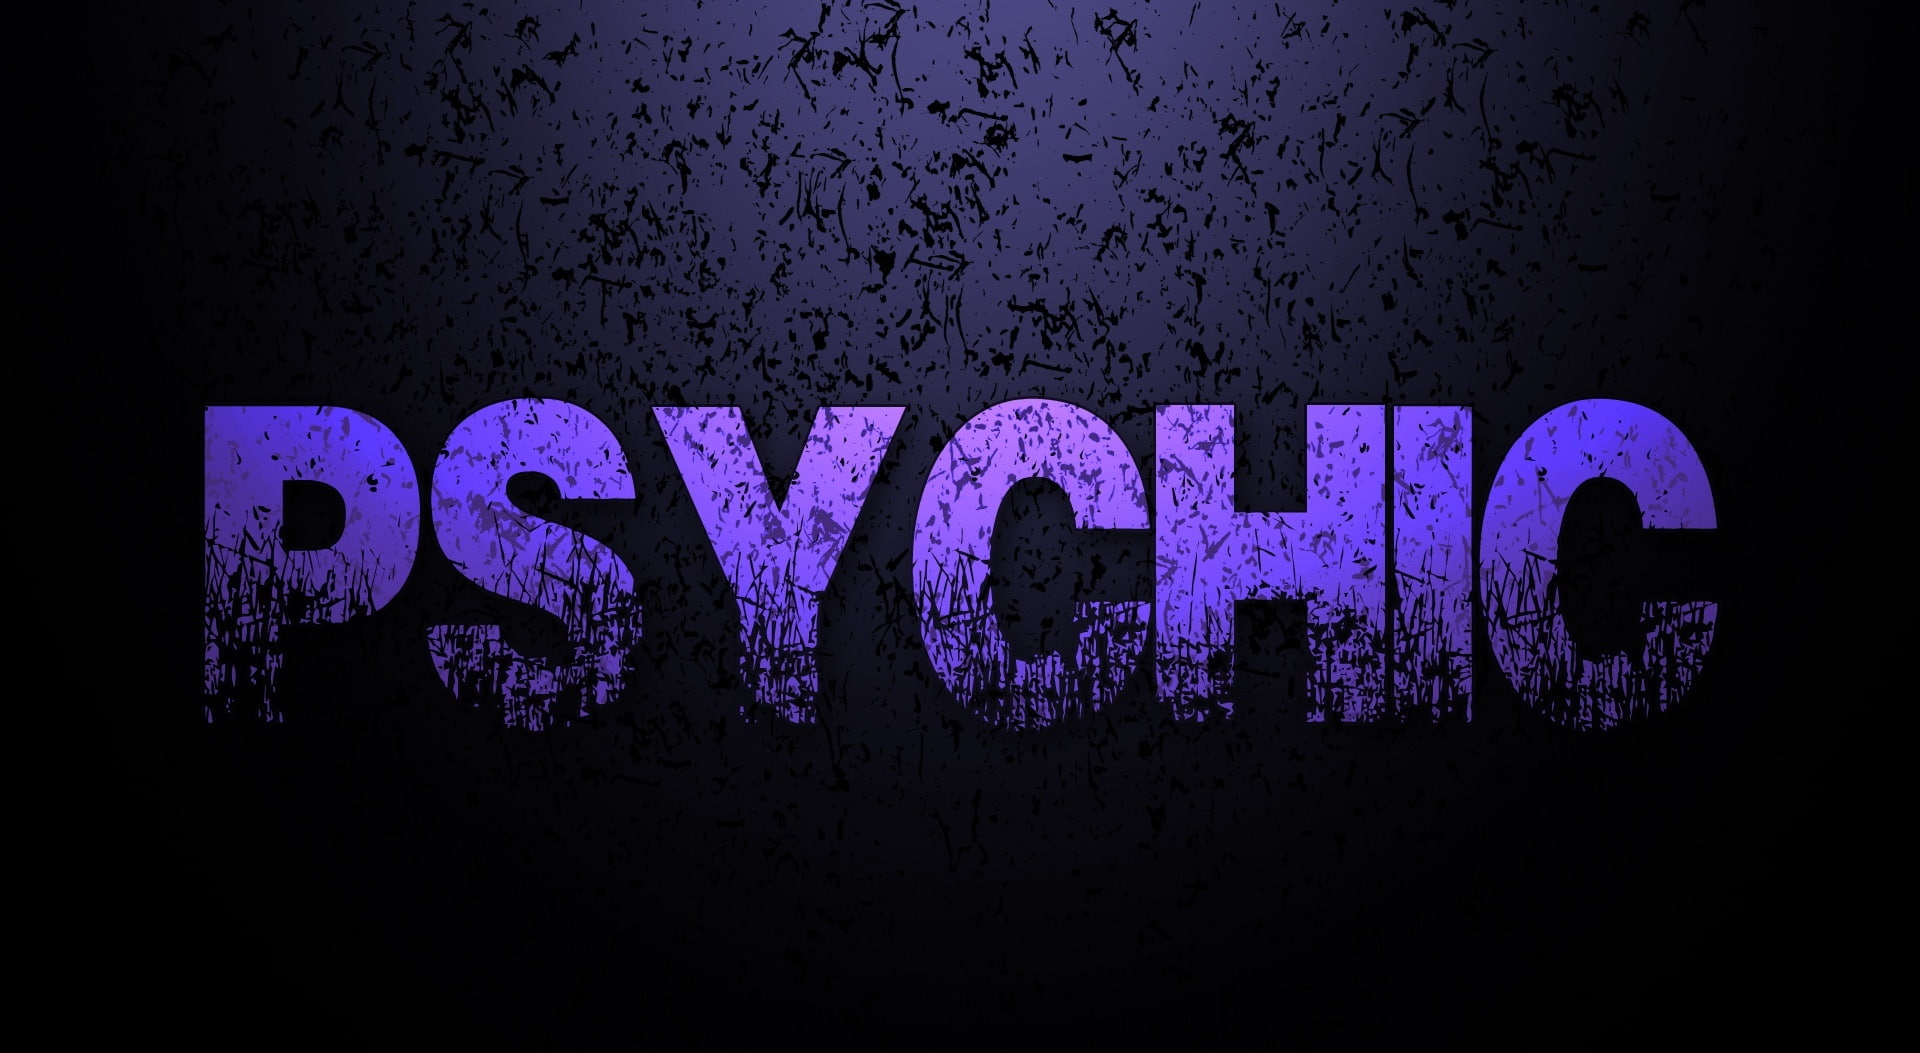 Psychic, Psychic logo, Artistic, Typography, text, communication